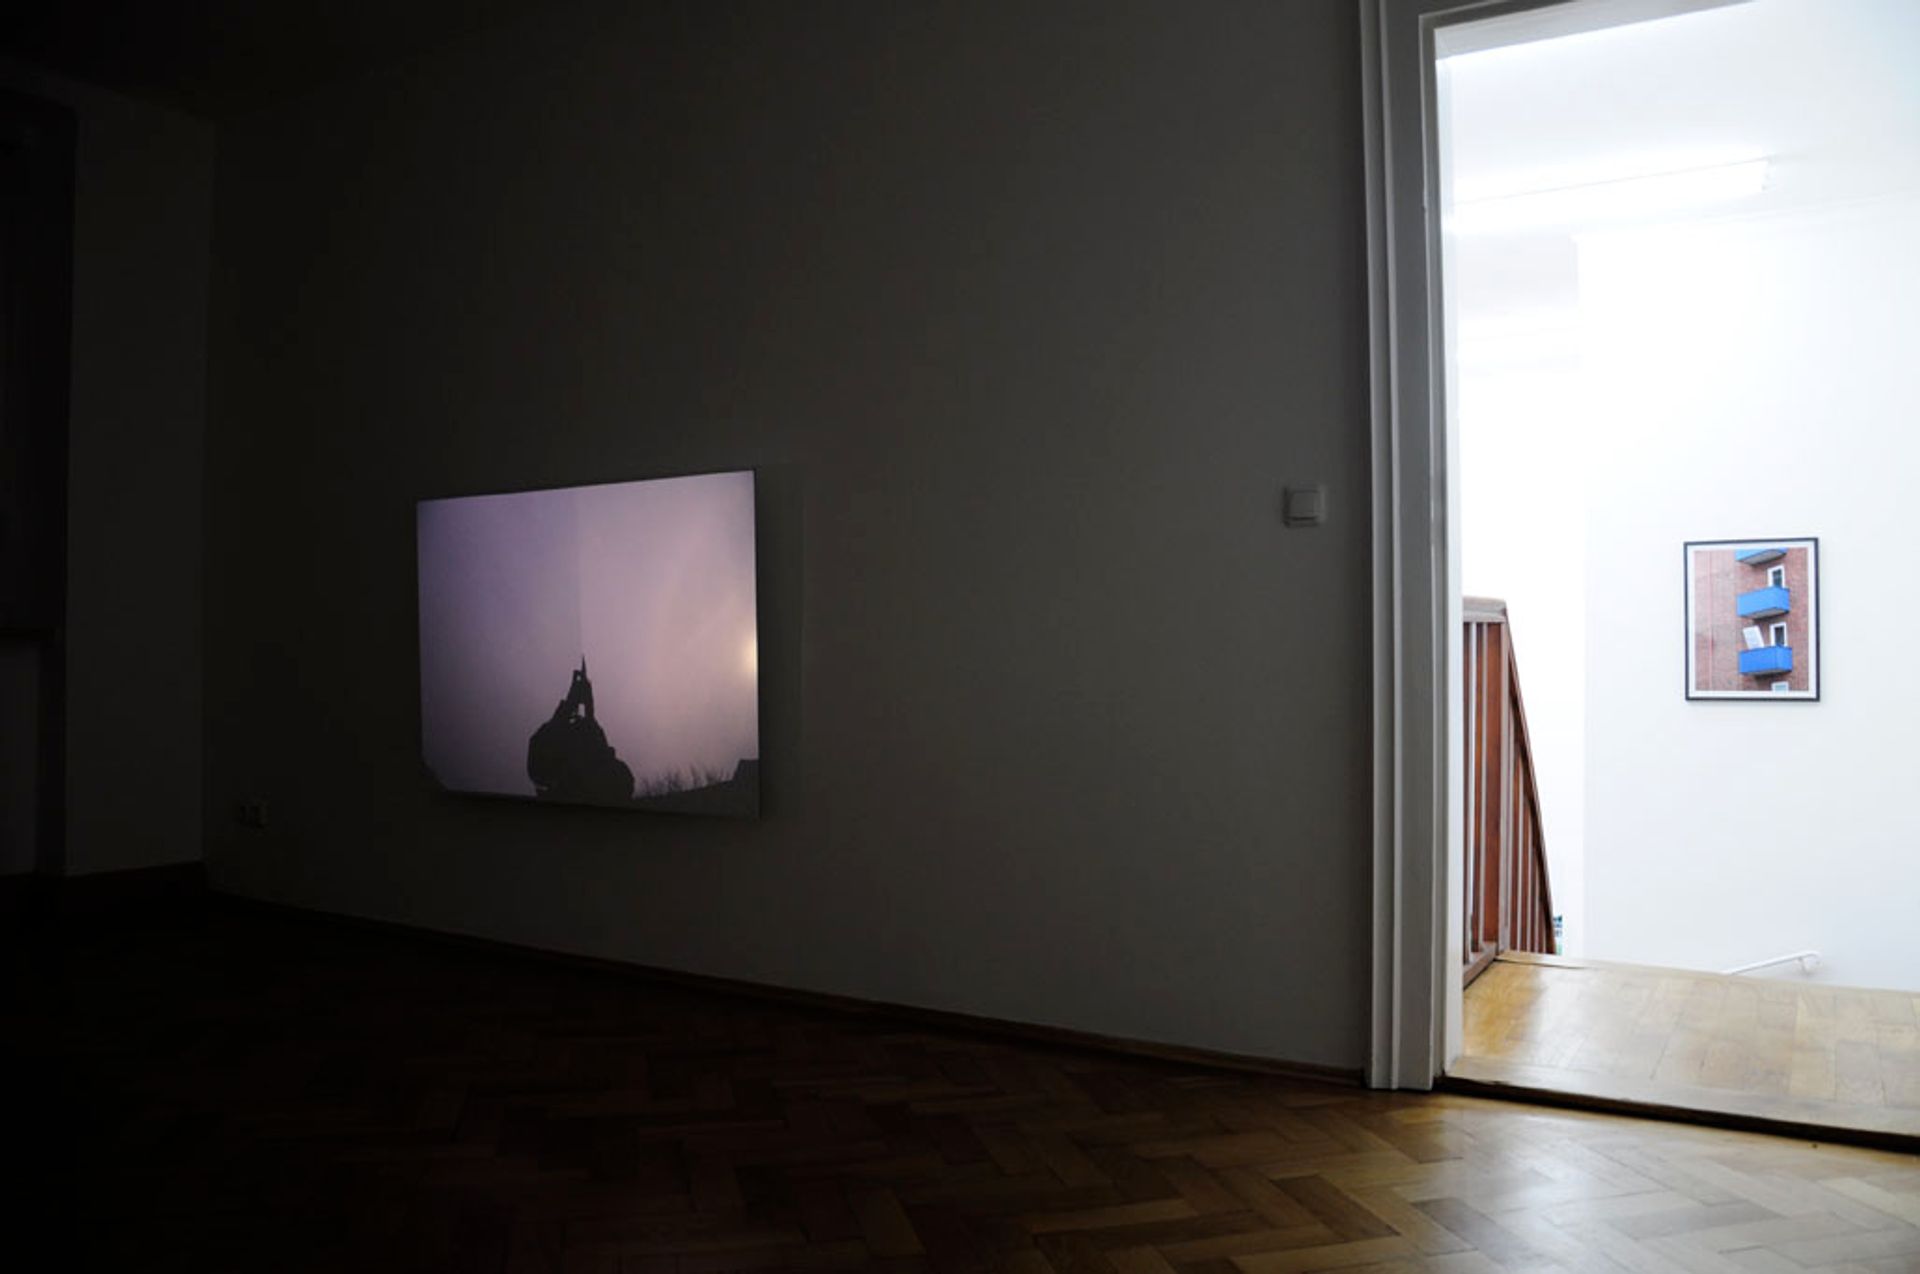 Installation view: Peter Dobroschke, “Stop & Go”, 2014